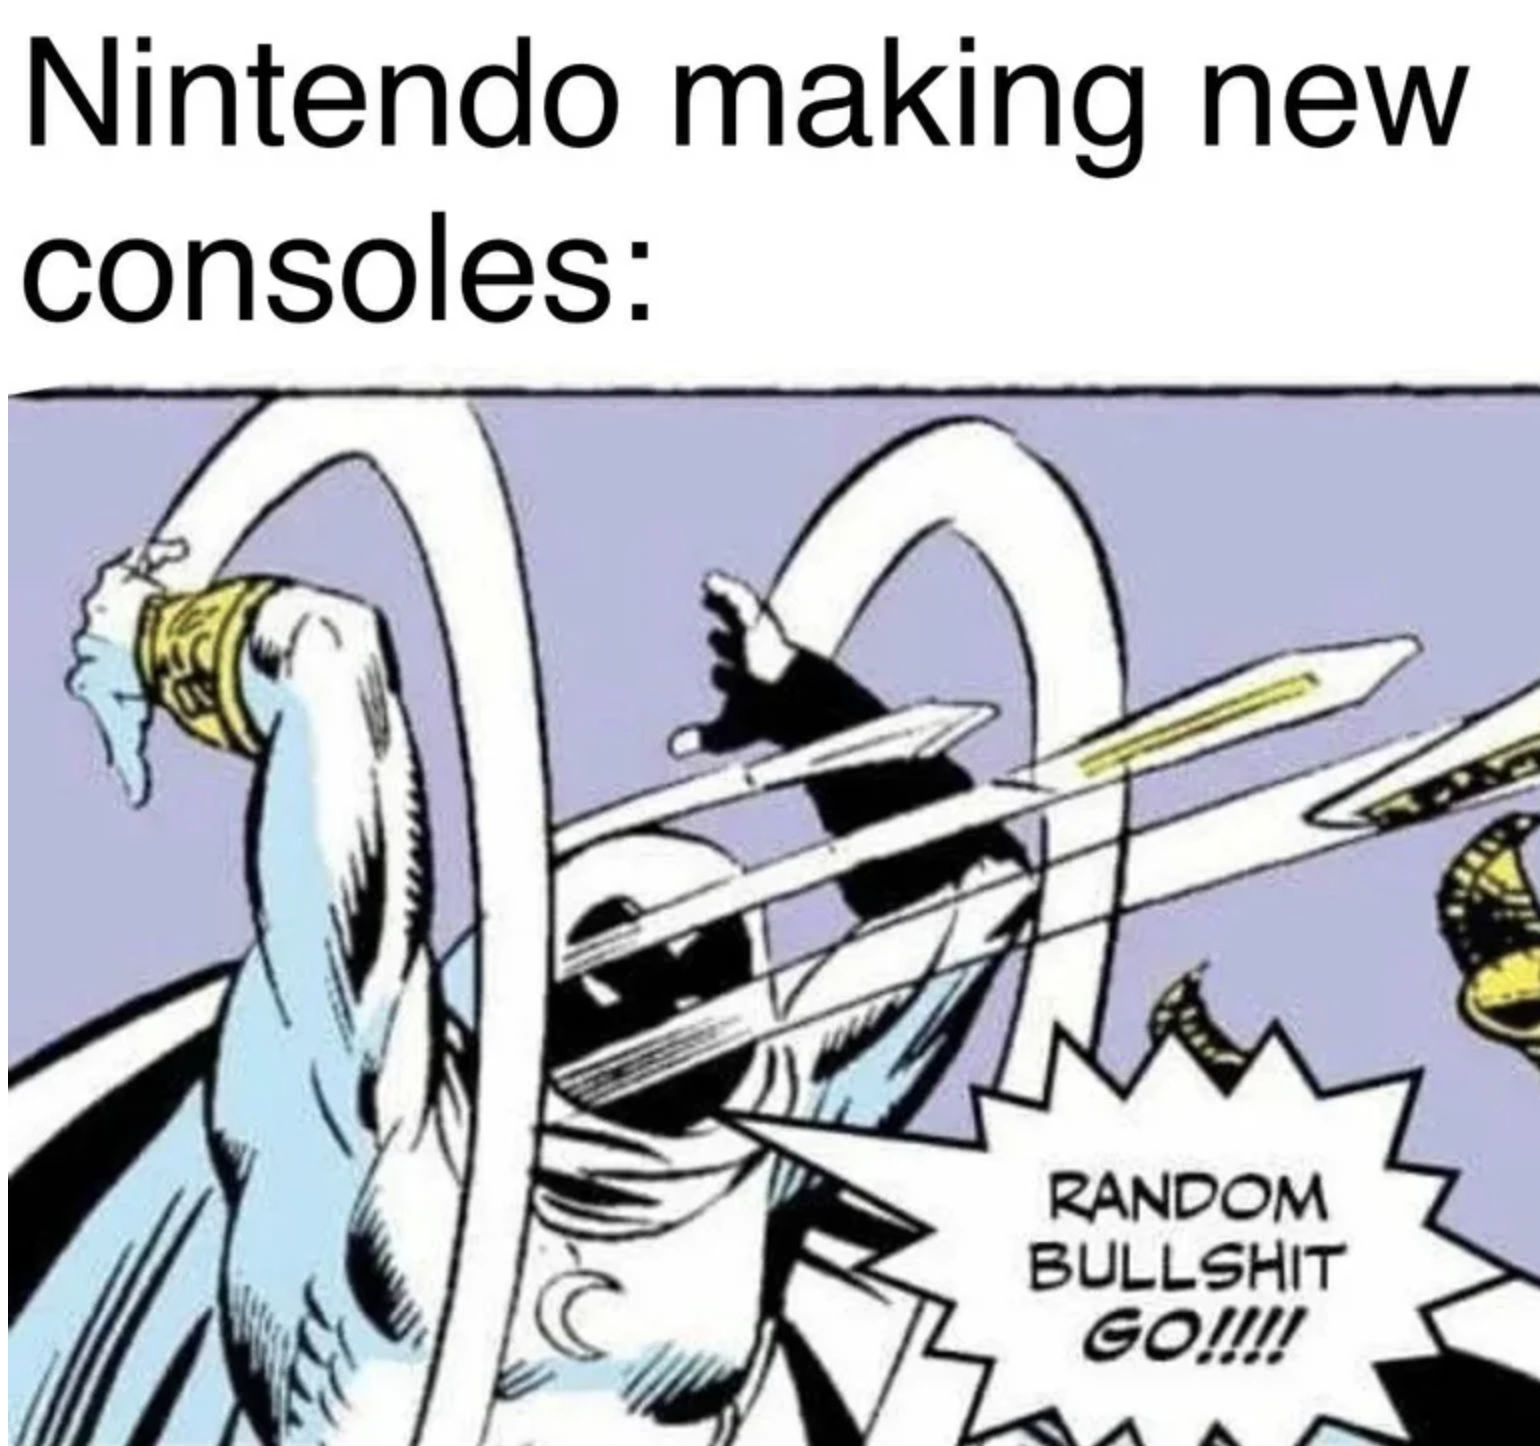 funny gaming memes - random bull go - Nintendo making new consoles Random Bullshit Go!!!!!